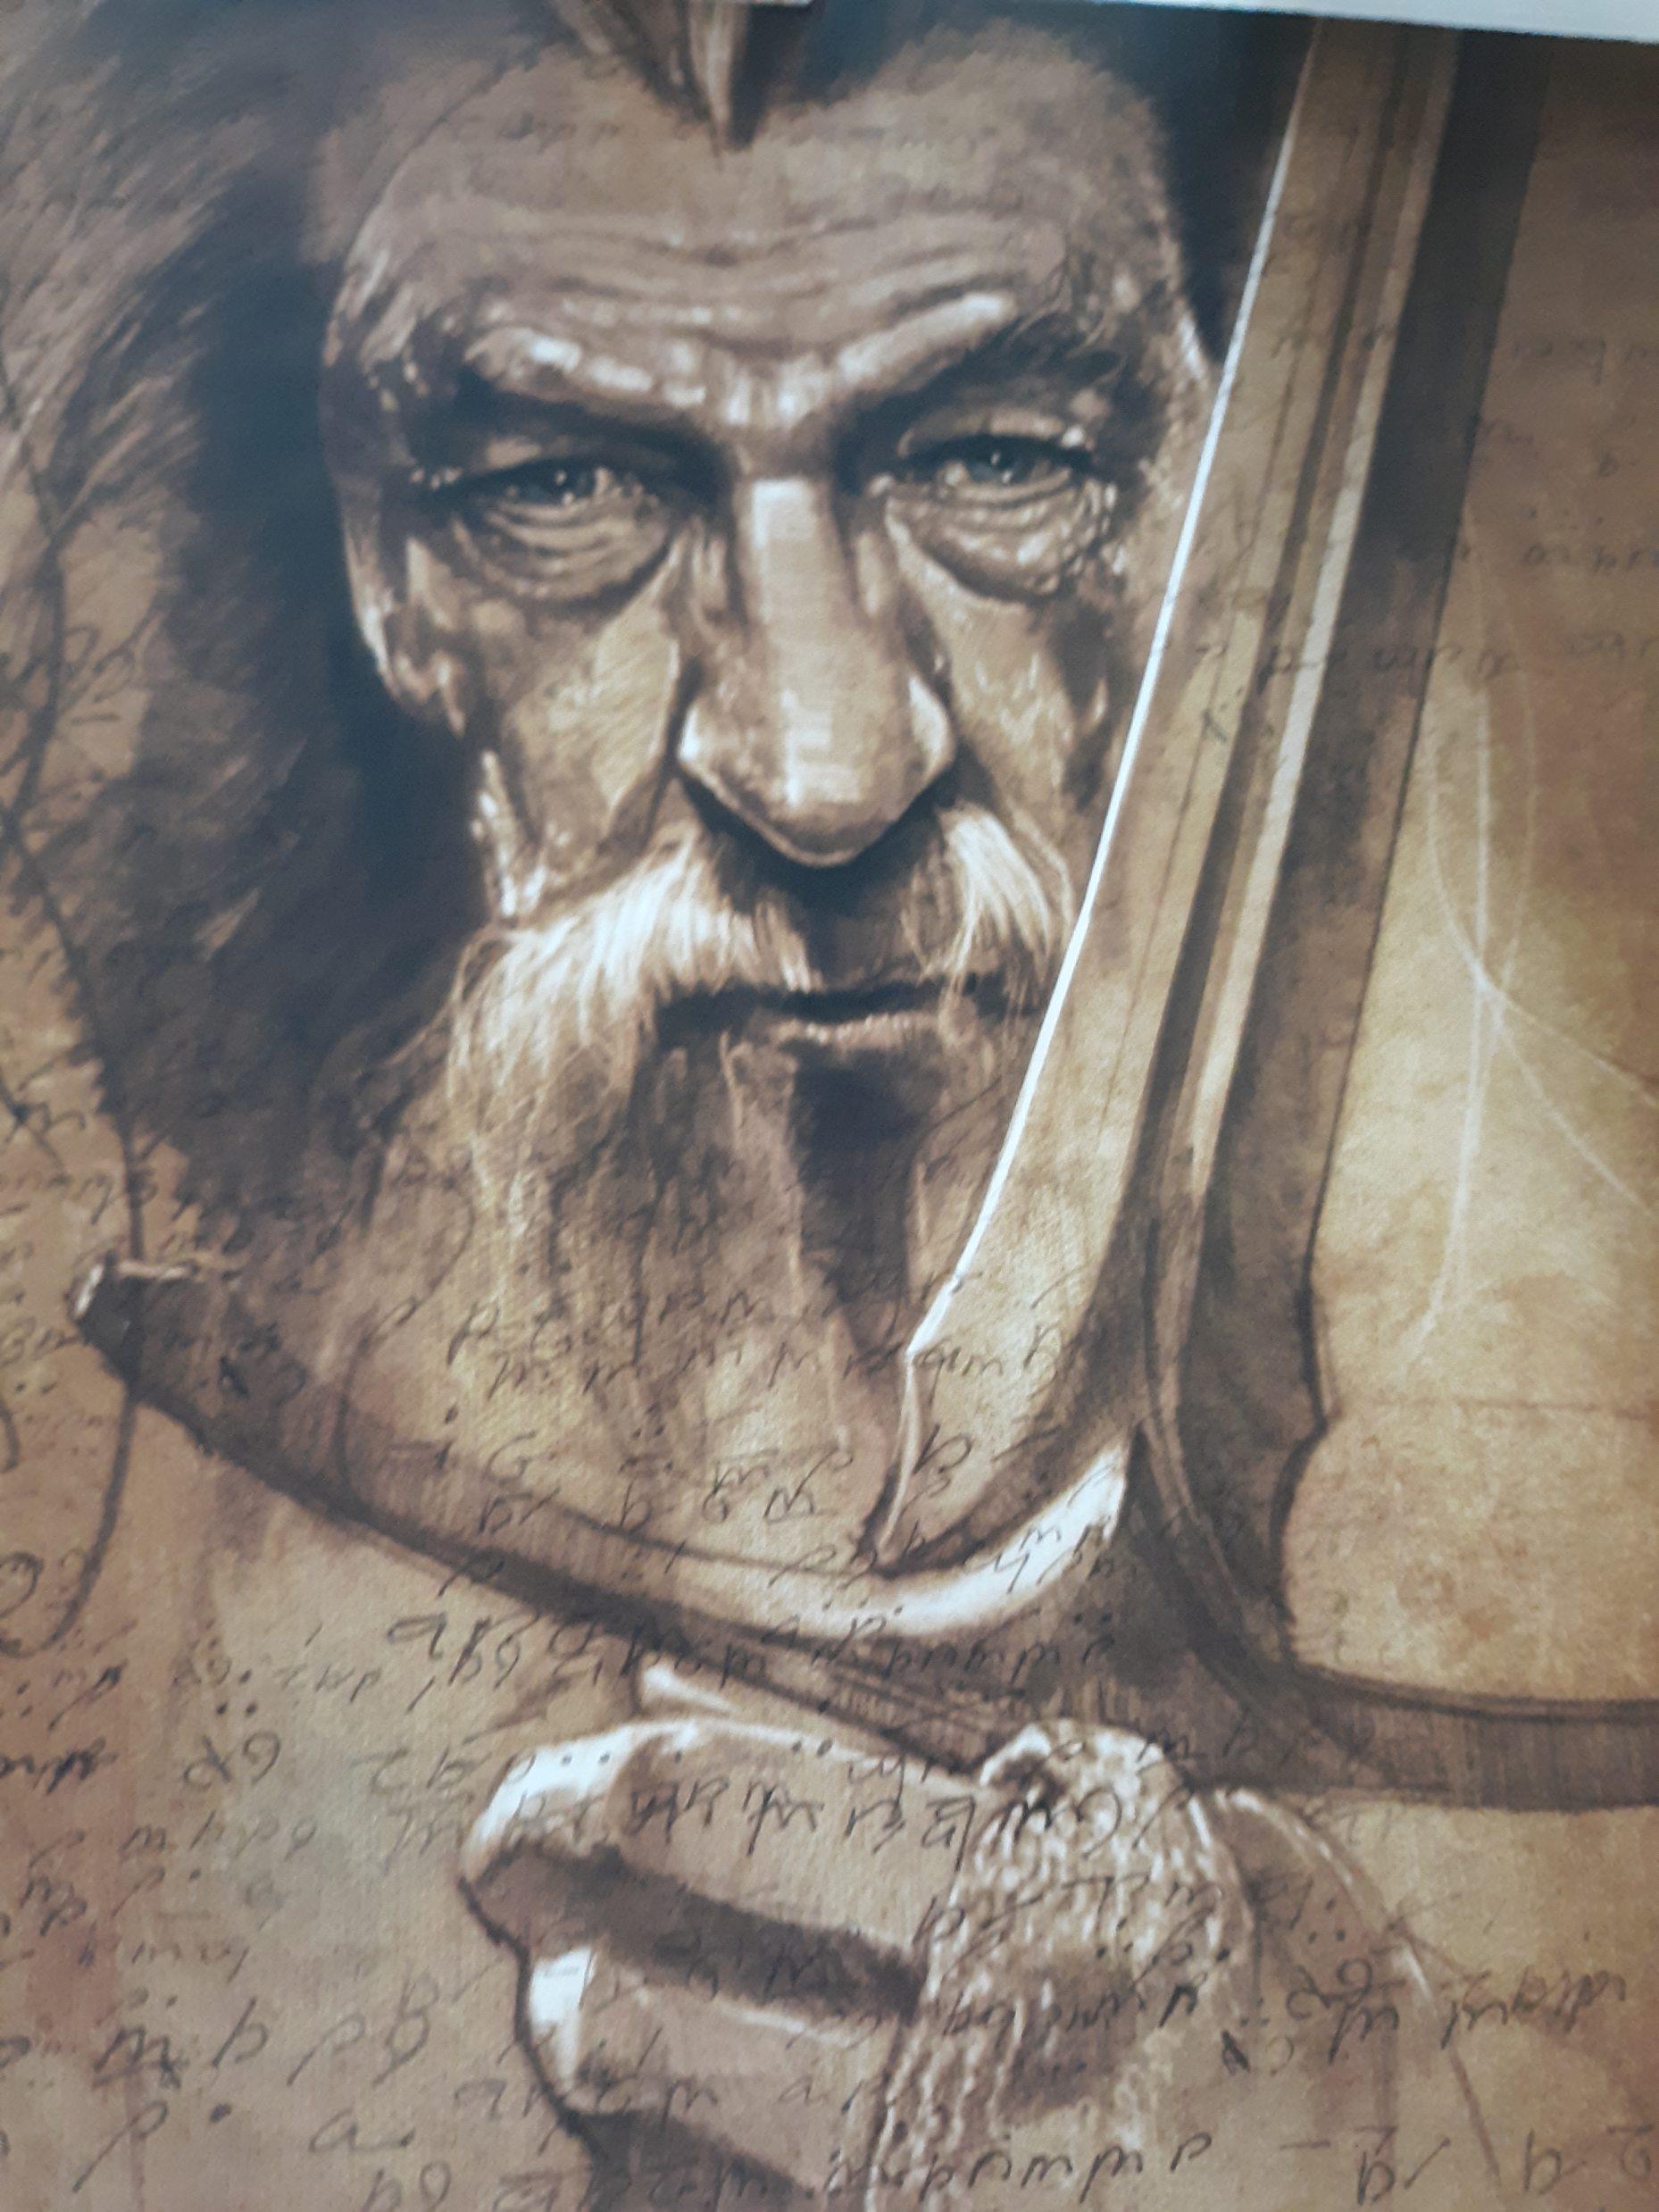 IMAX Movie Poster Hobbit